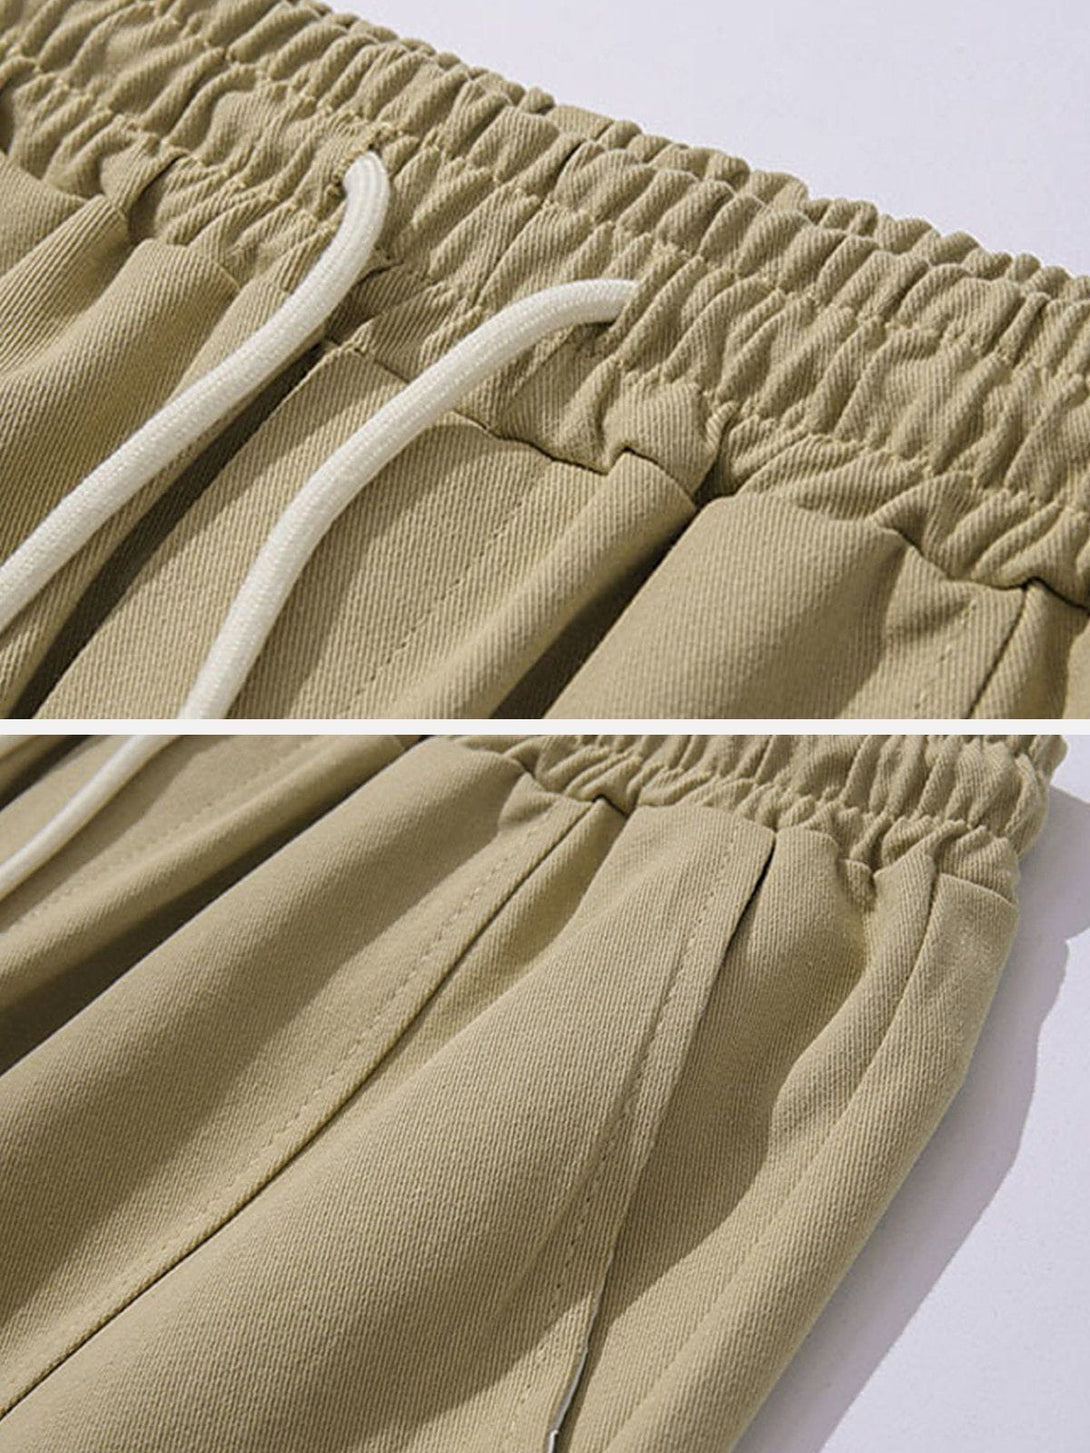 Majesda® - Large Pocket Drawstring Cargo Pants outfit ideas streetwear fashion